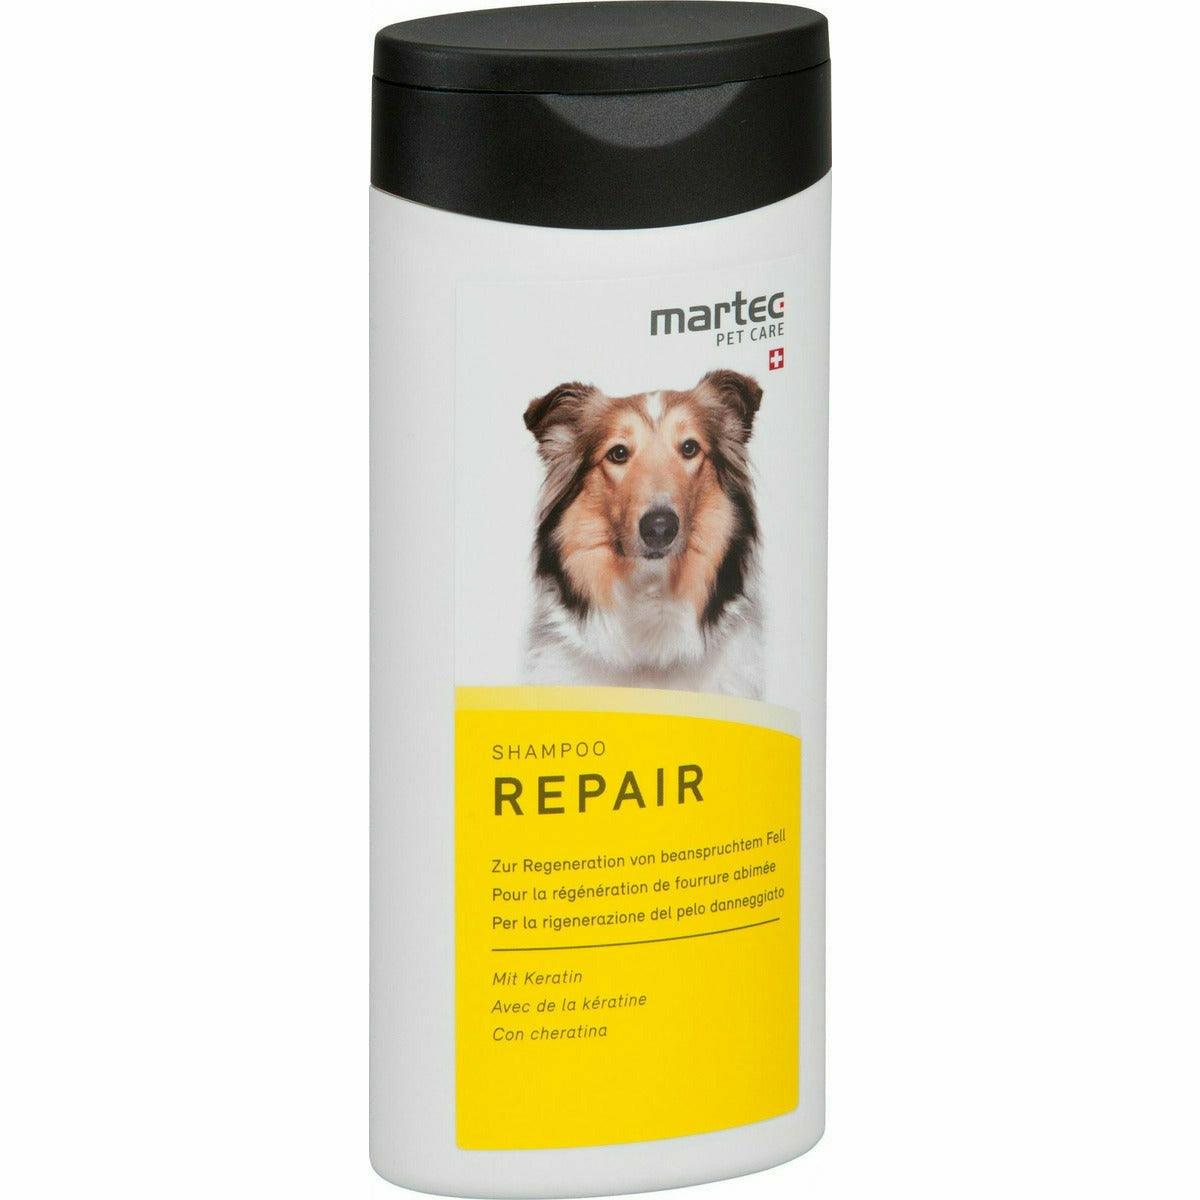 Martec Hundeshampoo Repair 250 ml im Outlet Sale